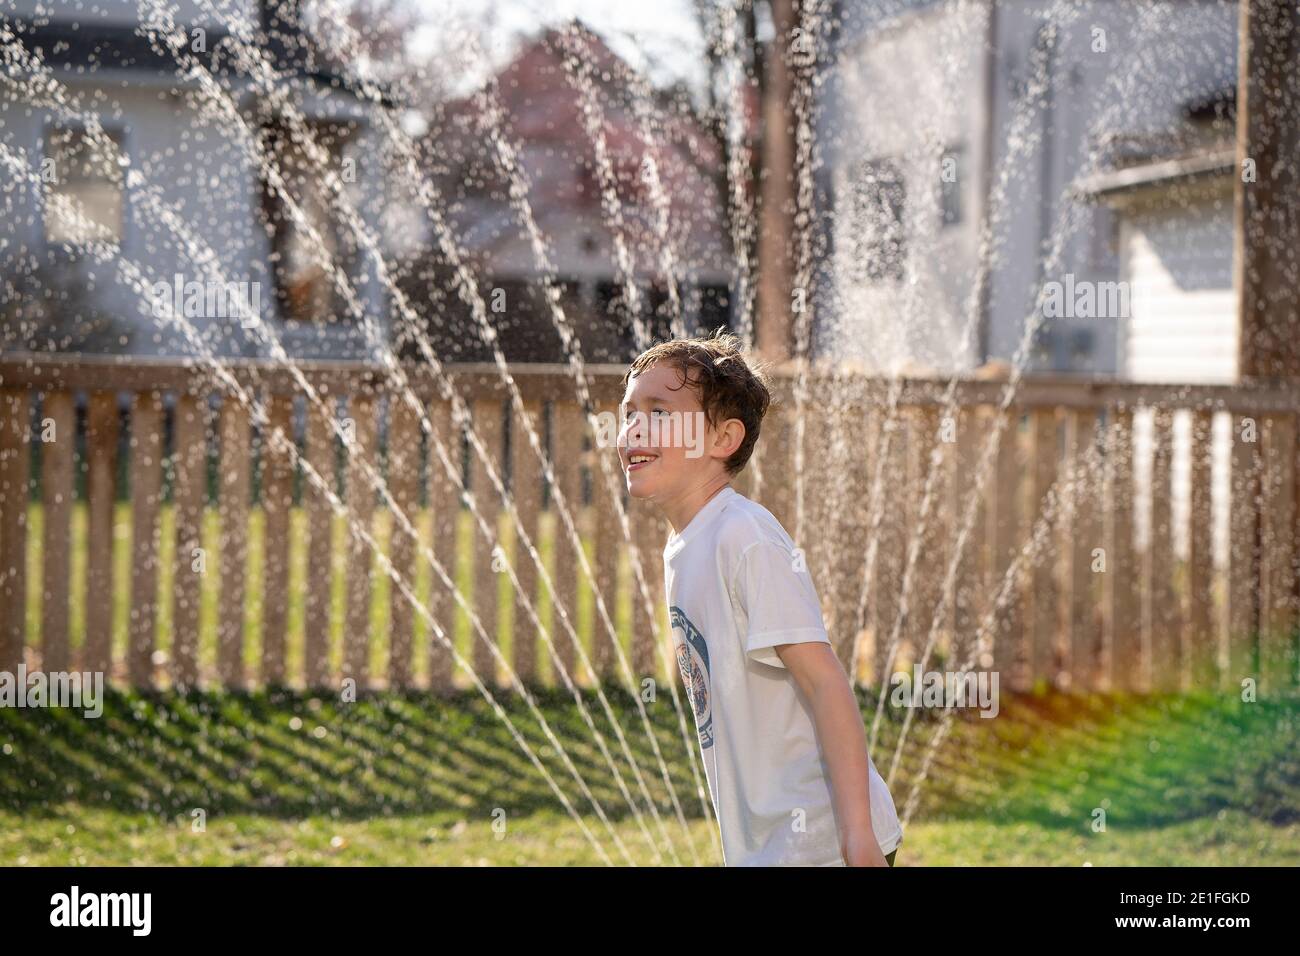 boy playing in water sprinkler in back yard Stock Photo